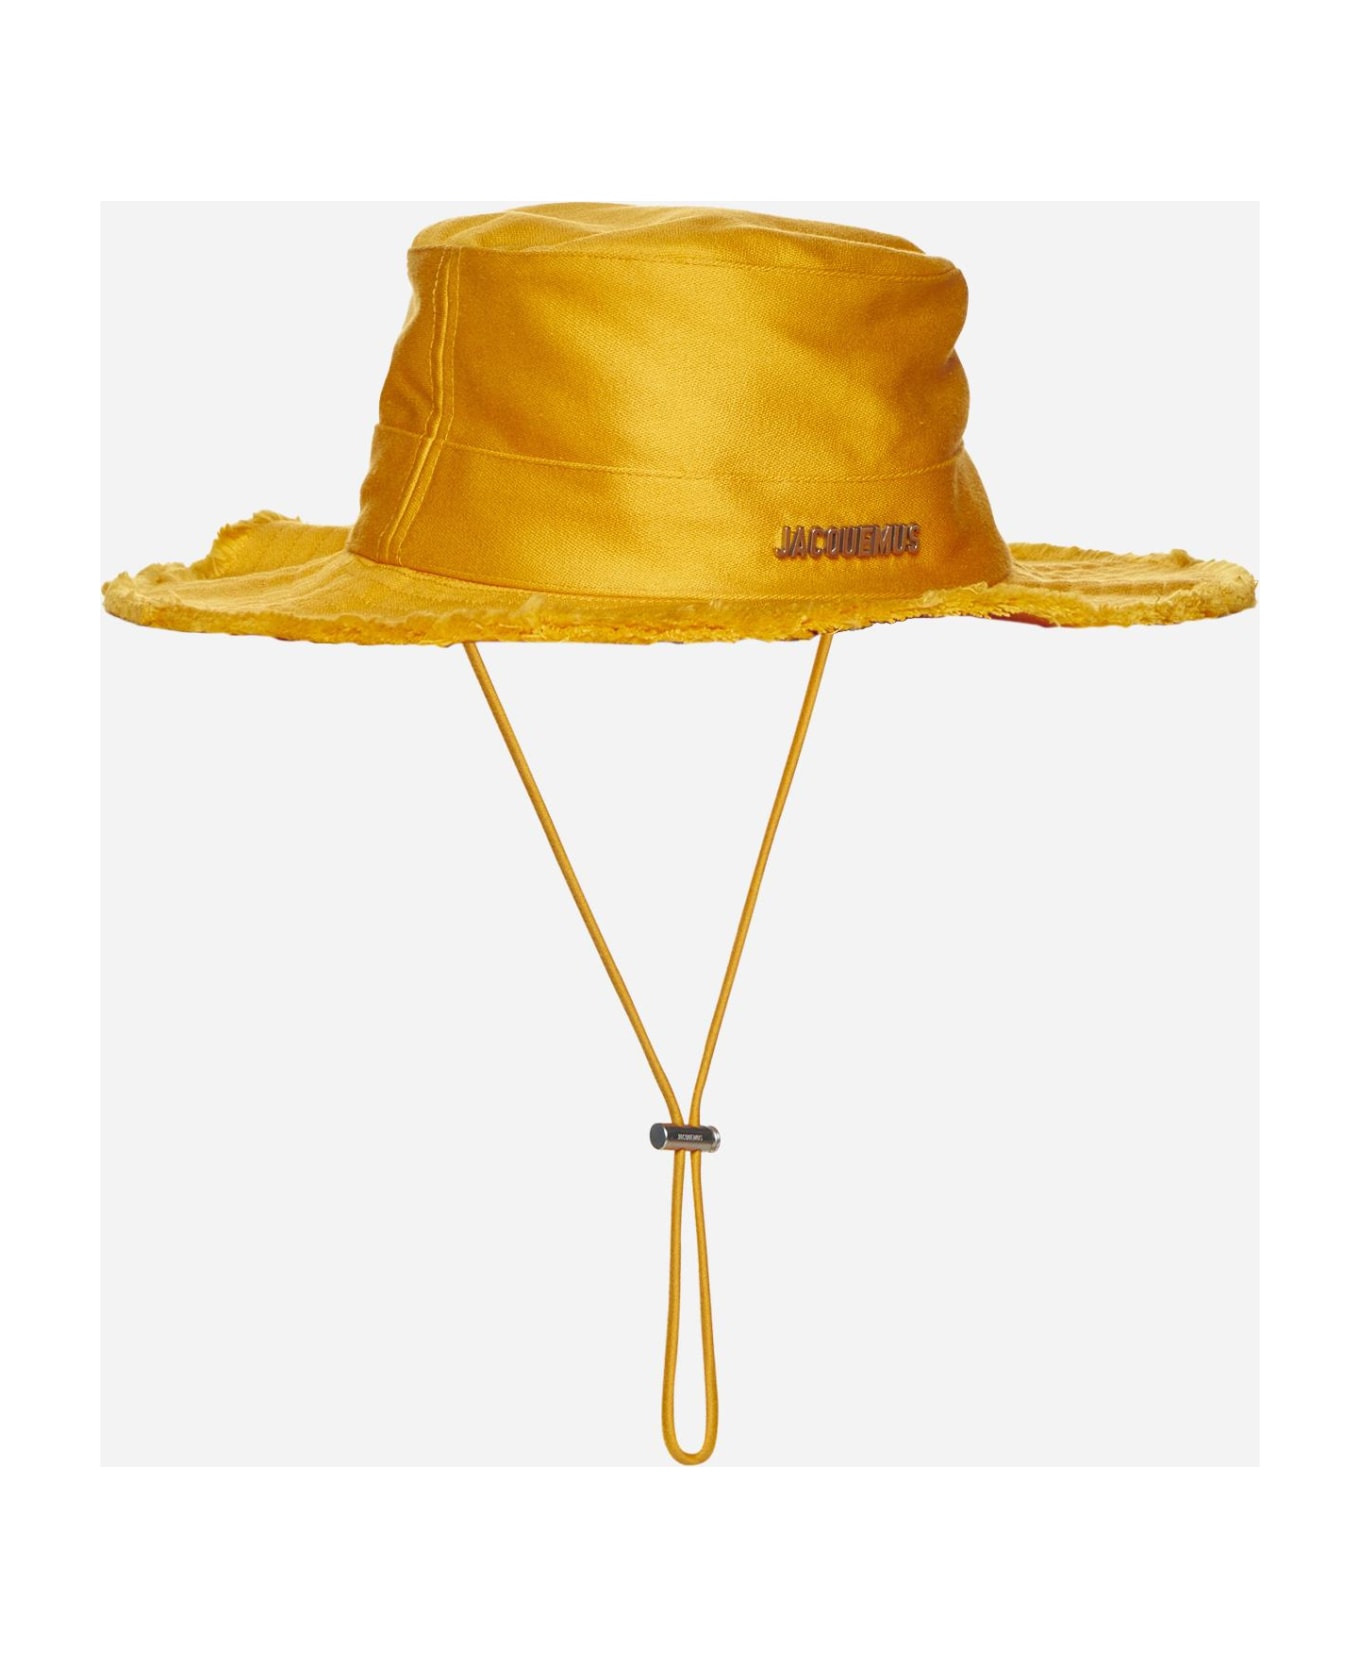 Jacquemus Le Bob Artichaut Frayed Expedition Hat - Dark orange 帽子